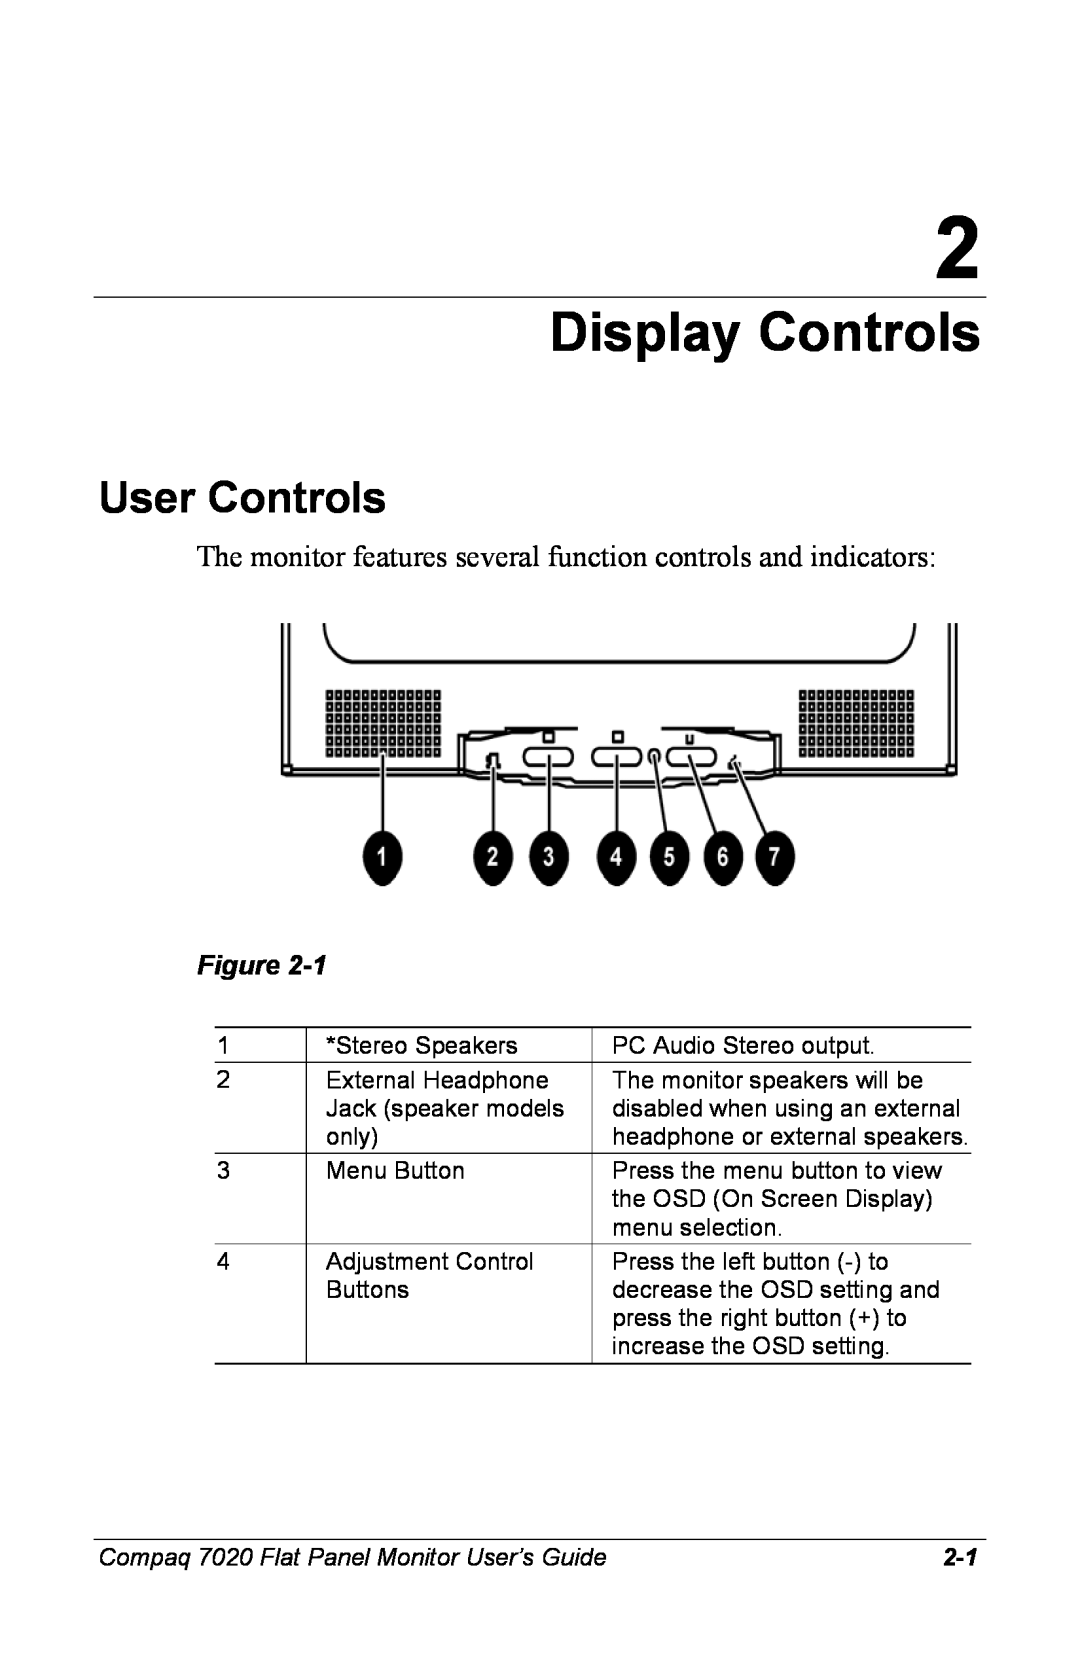 Compaq manual Display Controls, User Controls, Compaq 7020 Flat Panel Monitor User’s Guide 